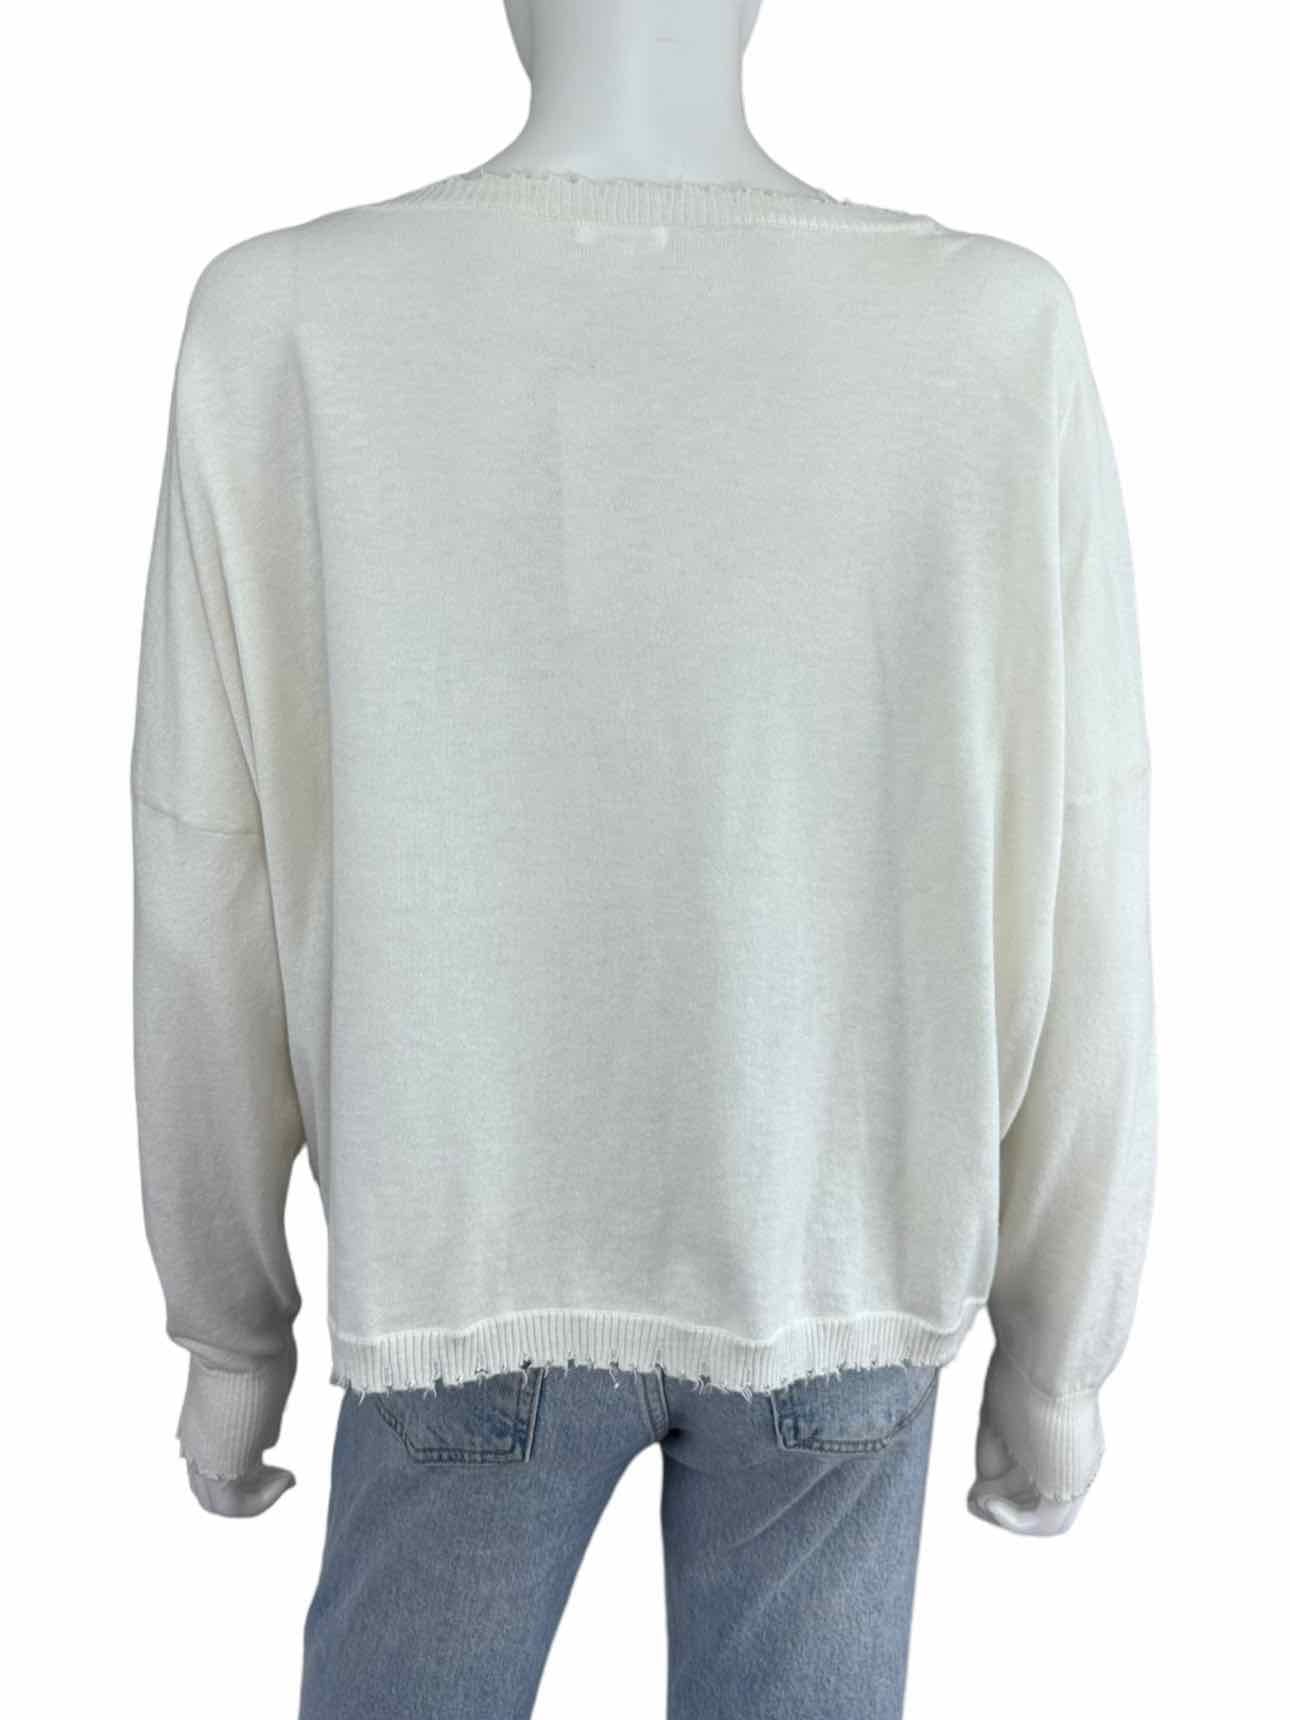 minnie rose Sweater Size XS